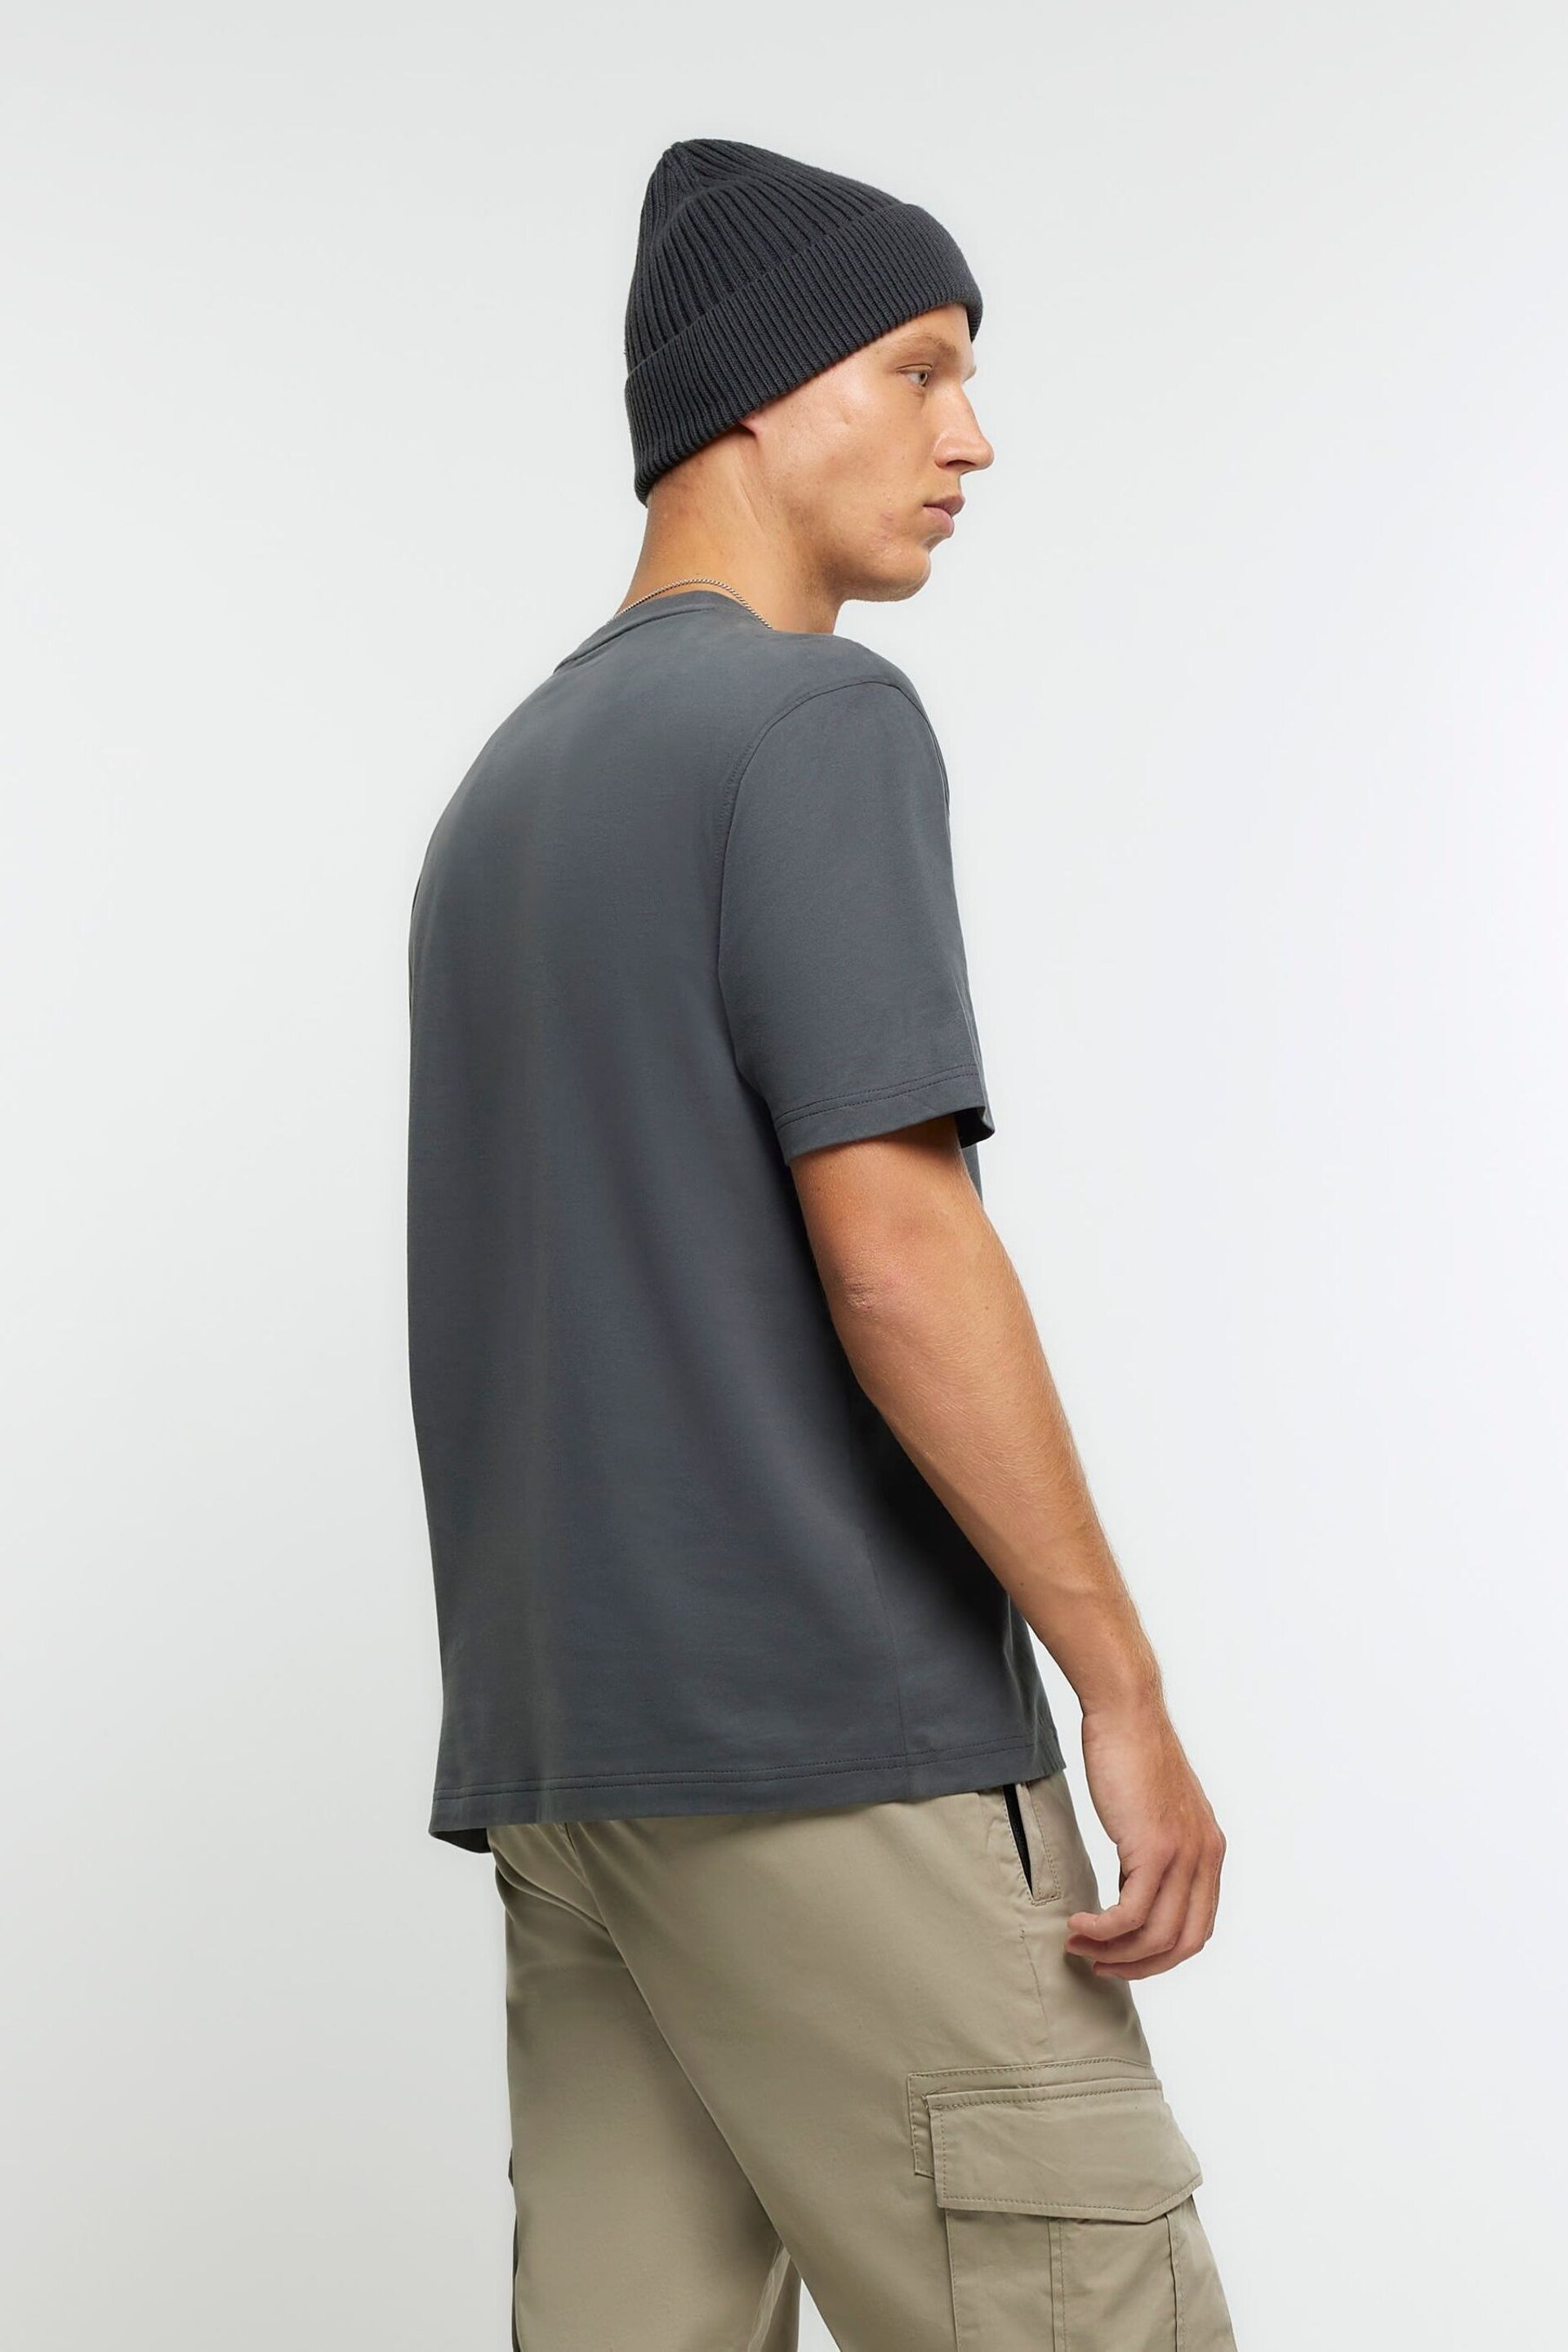 River Island Grey Regular Fit T-Shirt - Image 4 of 4